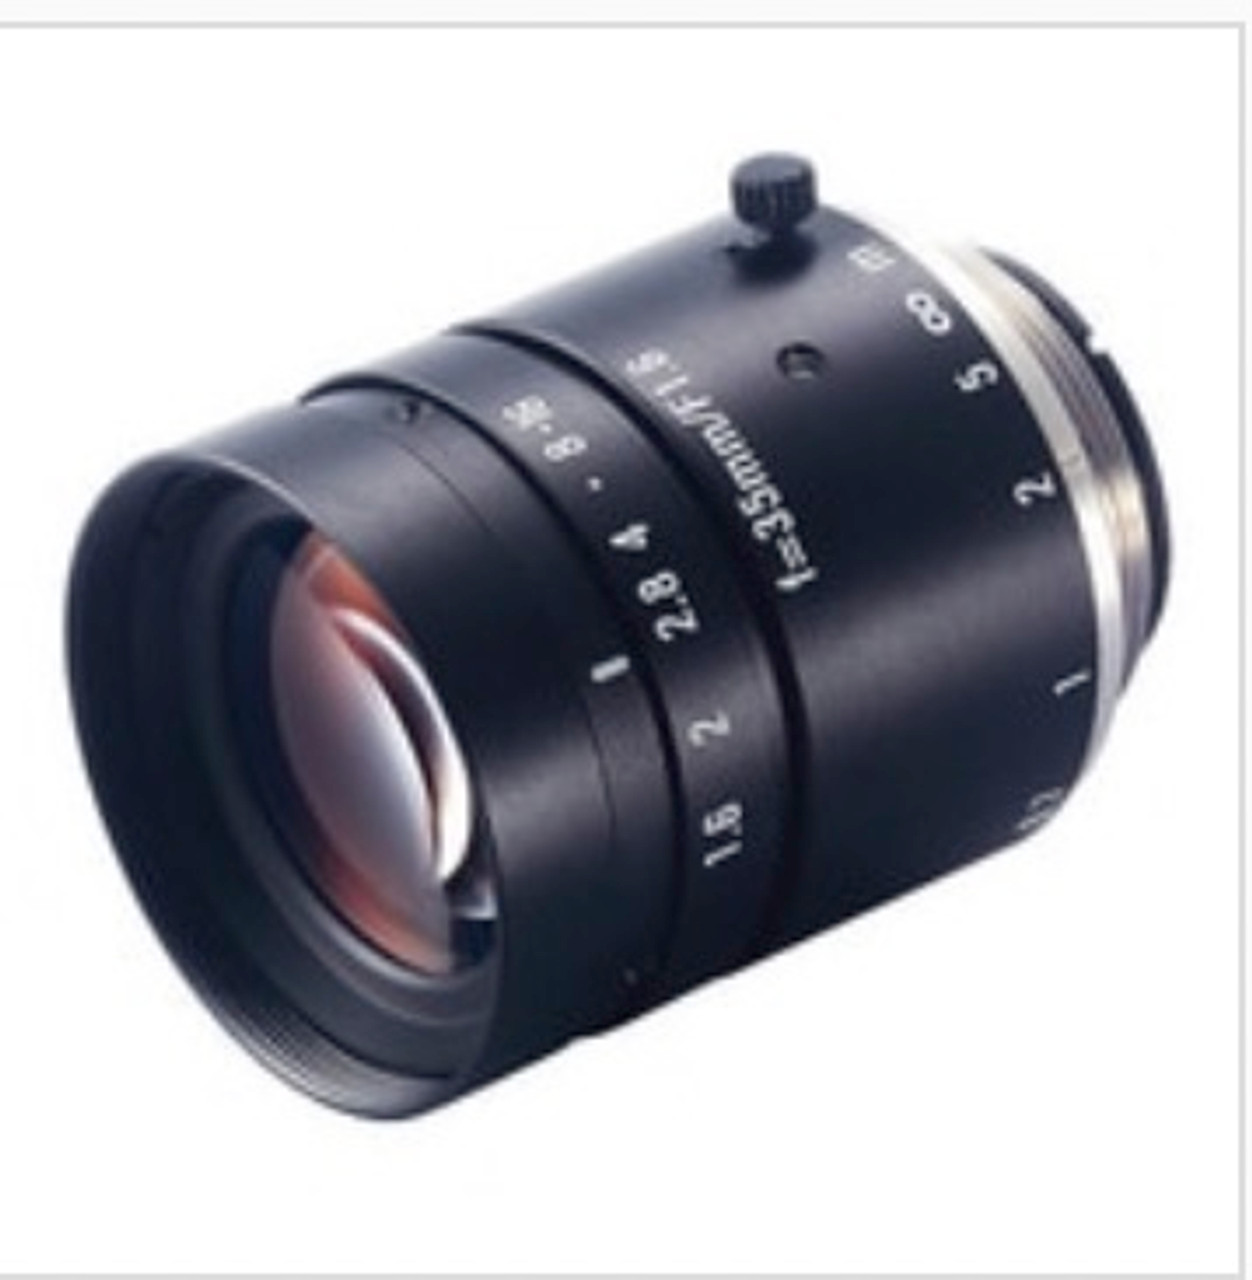 Keyence CV-L35 Lenses (for Machine Vision), Lens, 35mm, F1.6 to F16 [New]